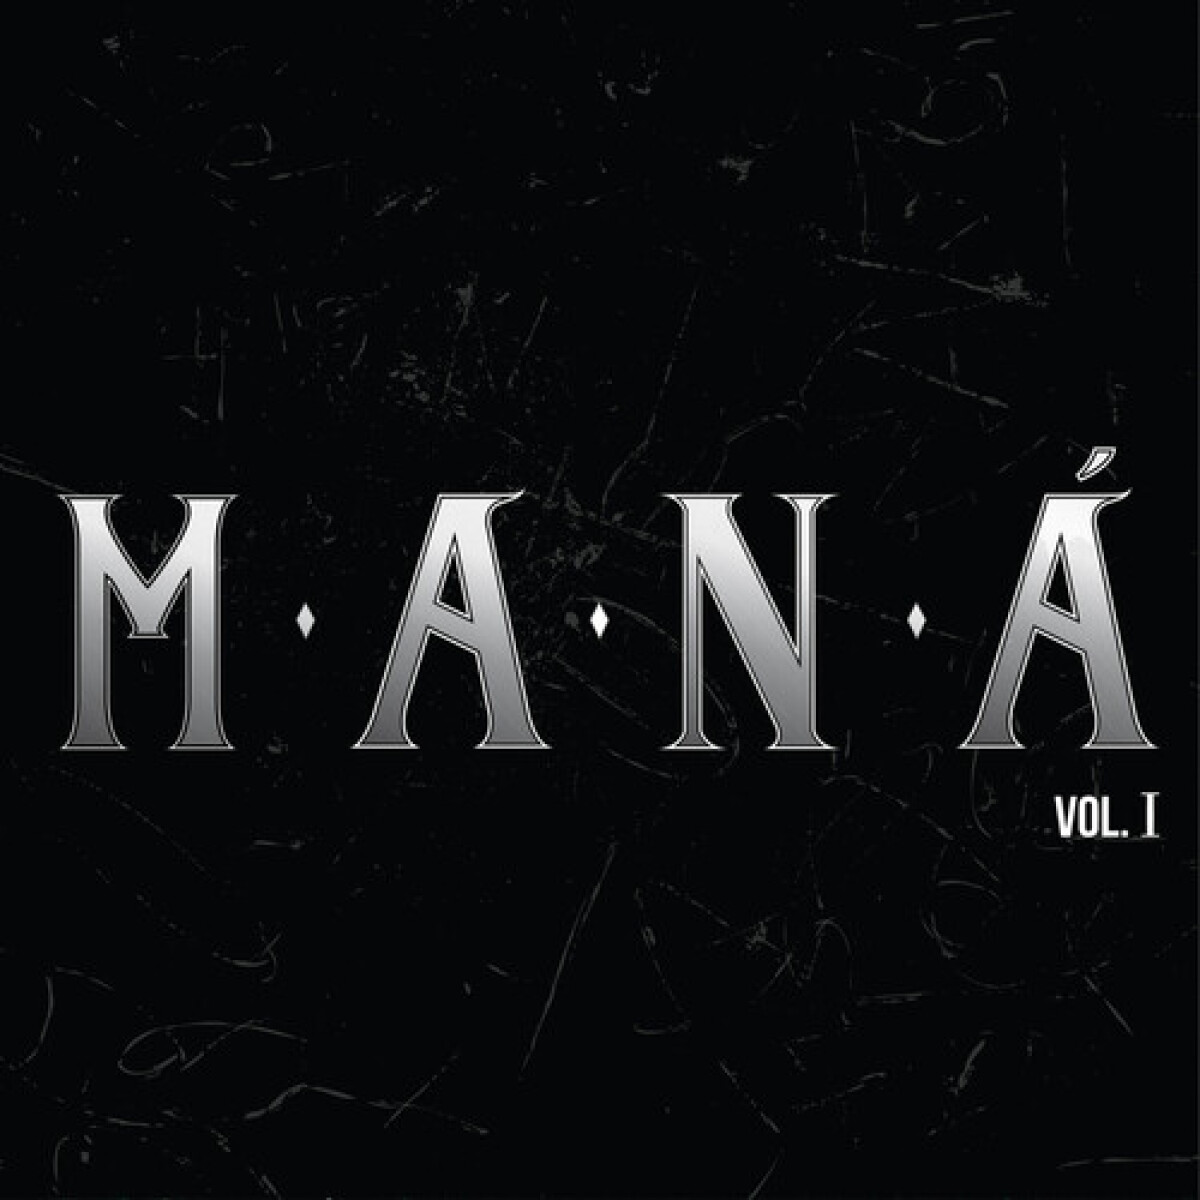 Mana- Mana Remastered Vol.1 Lps (deluxe) - Vinilo 